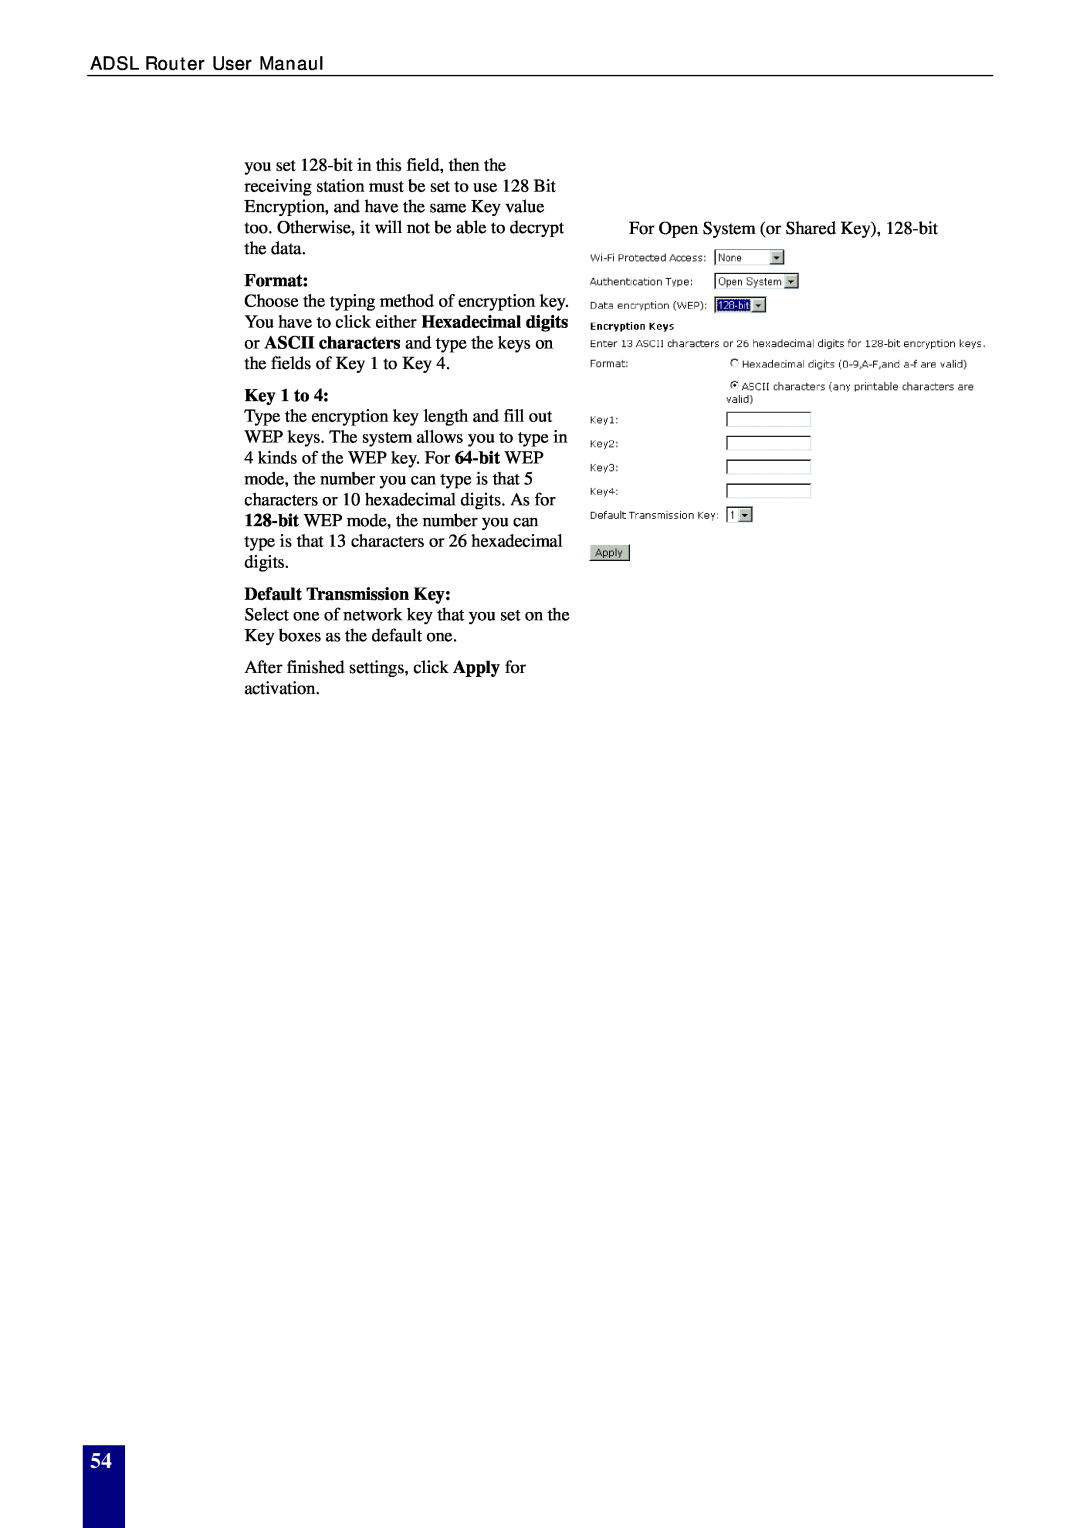 Dynalink RTA770W user manual Format, Key 1 to, Default Transmission Key 